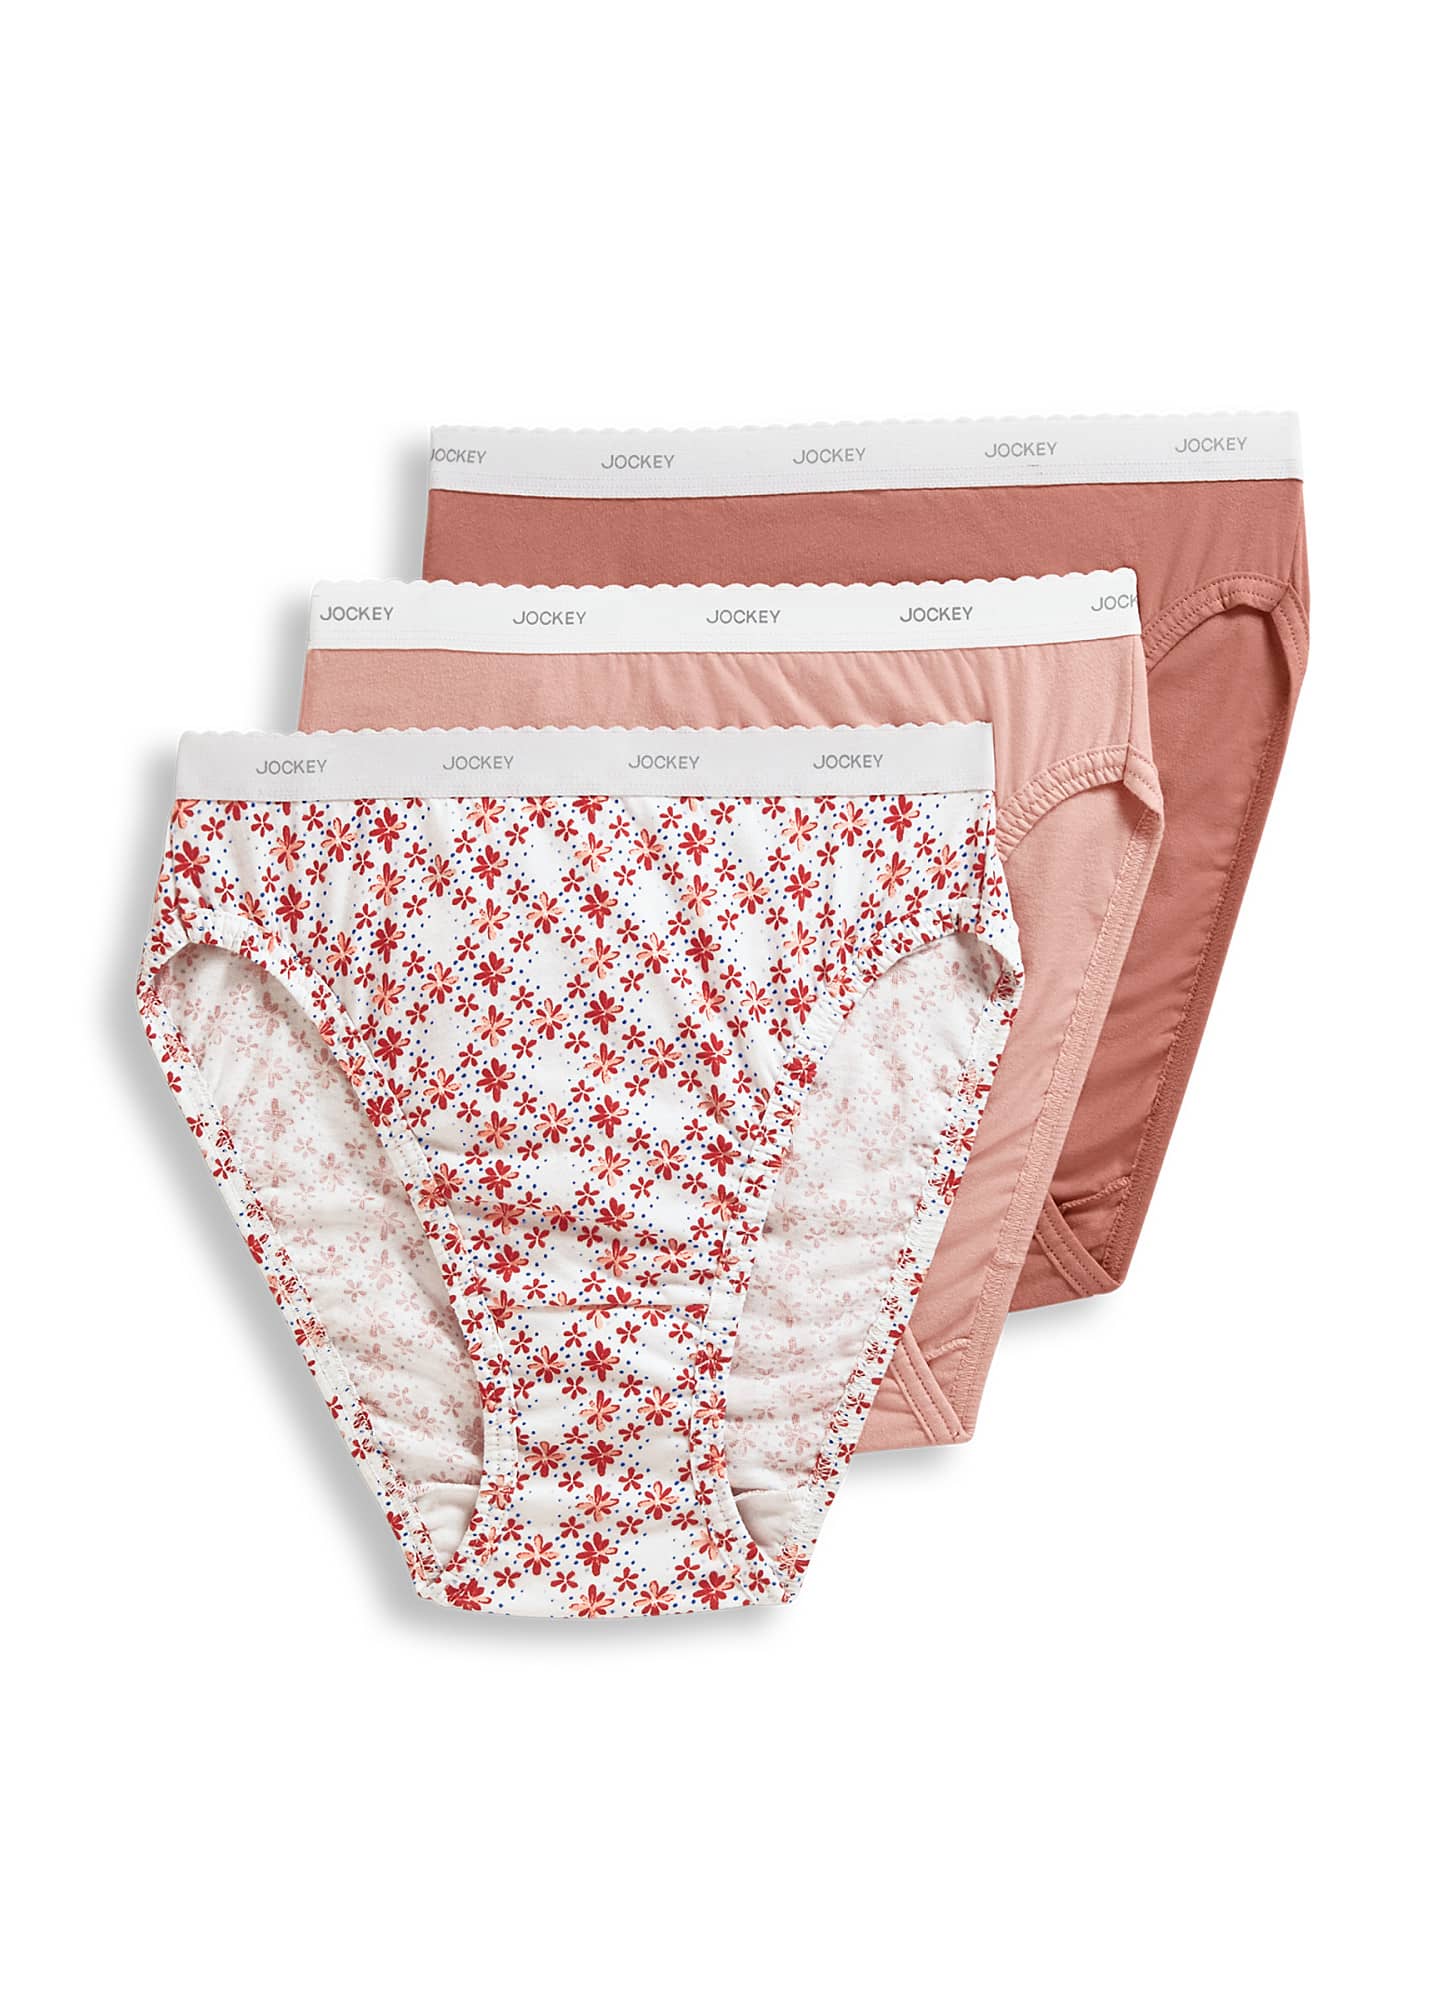 Jockey Women's Underwear Classic French Cut - 3 Pack, White, 5 at